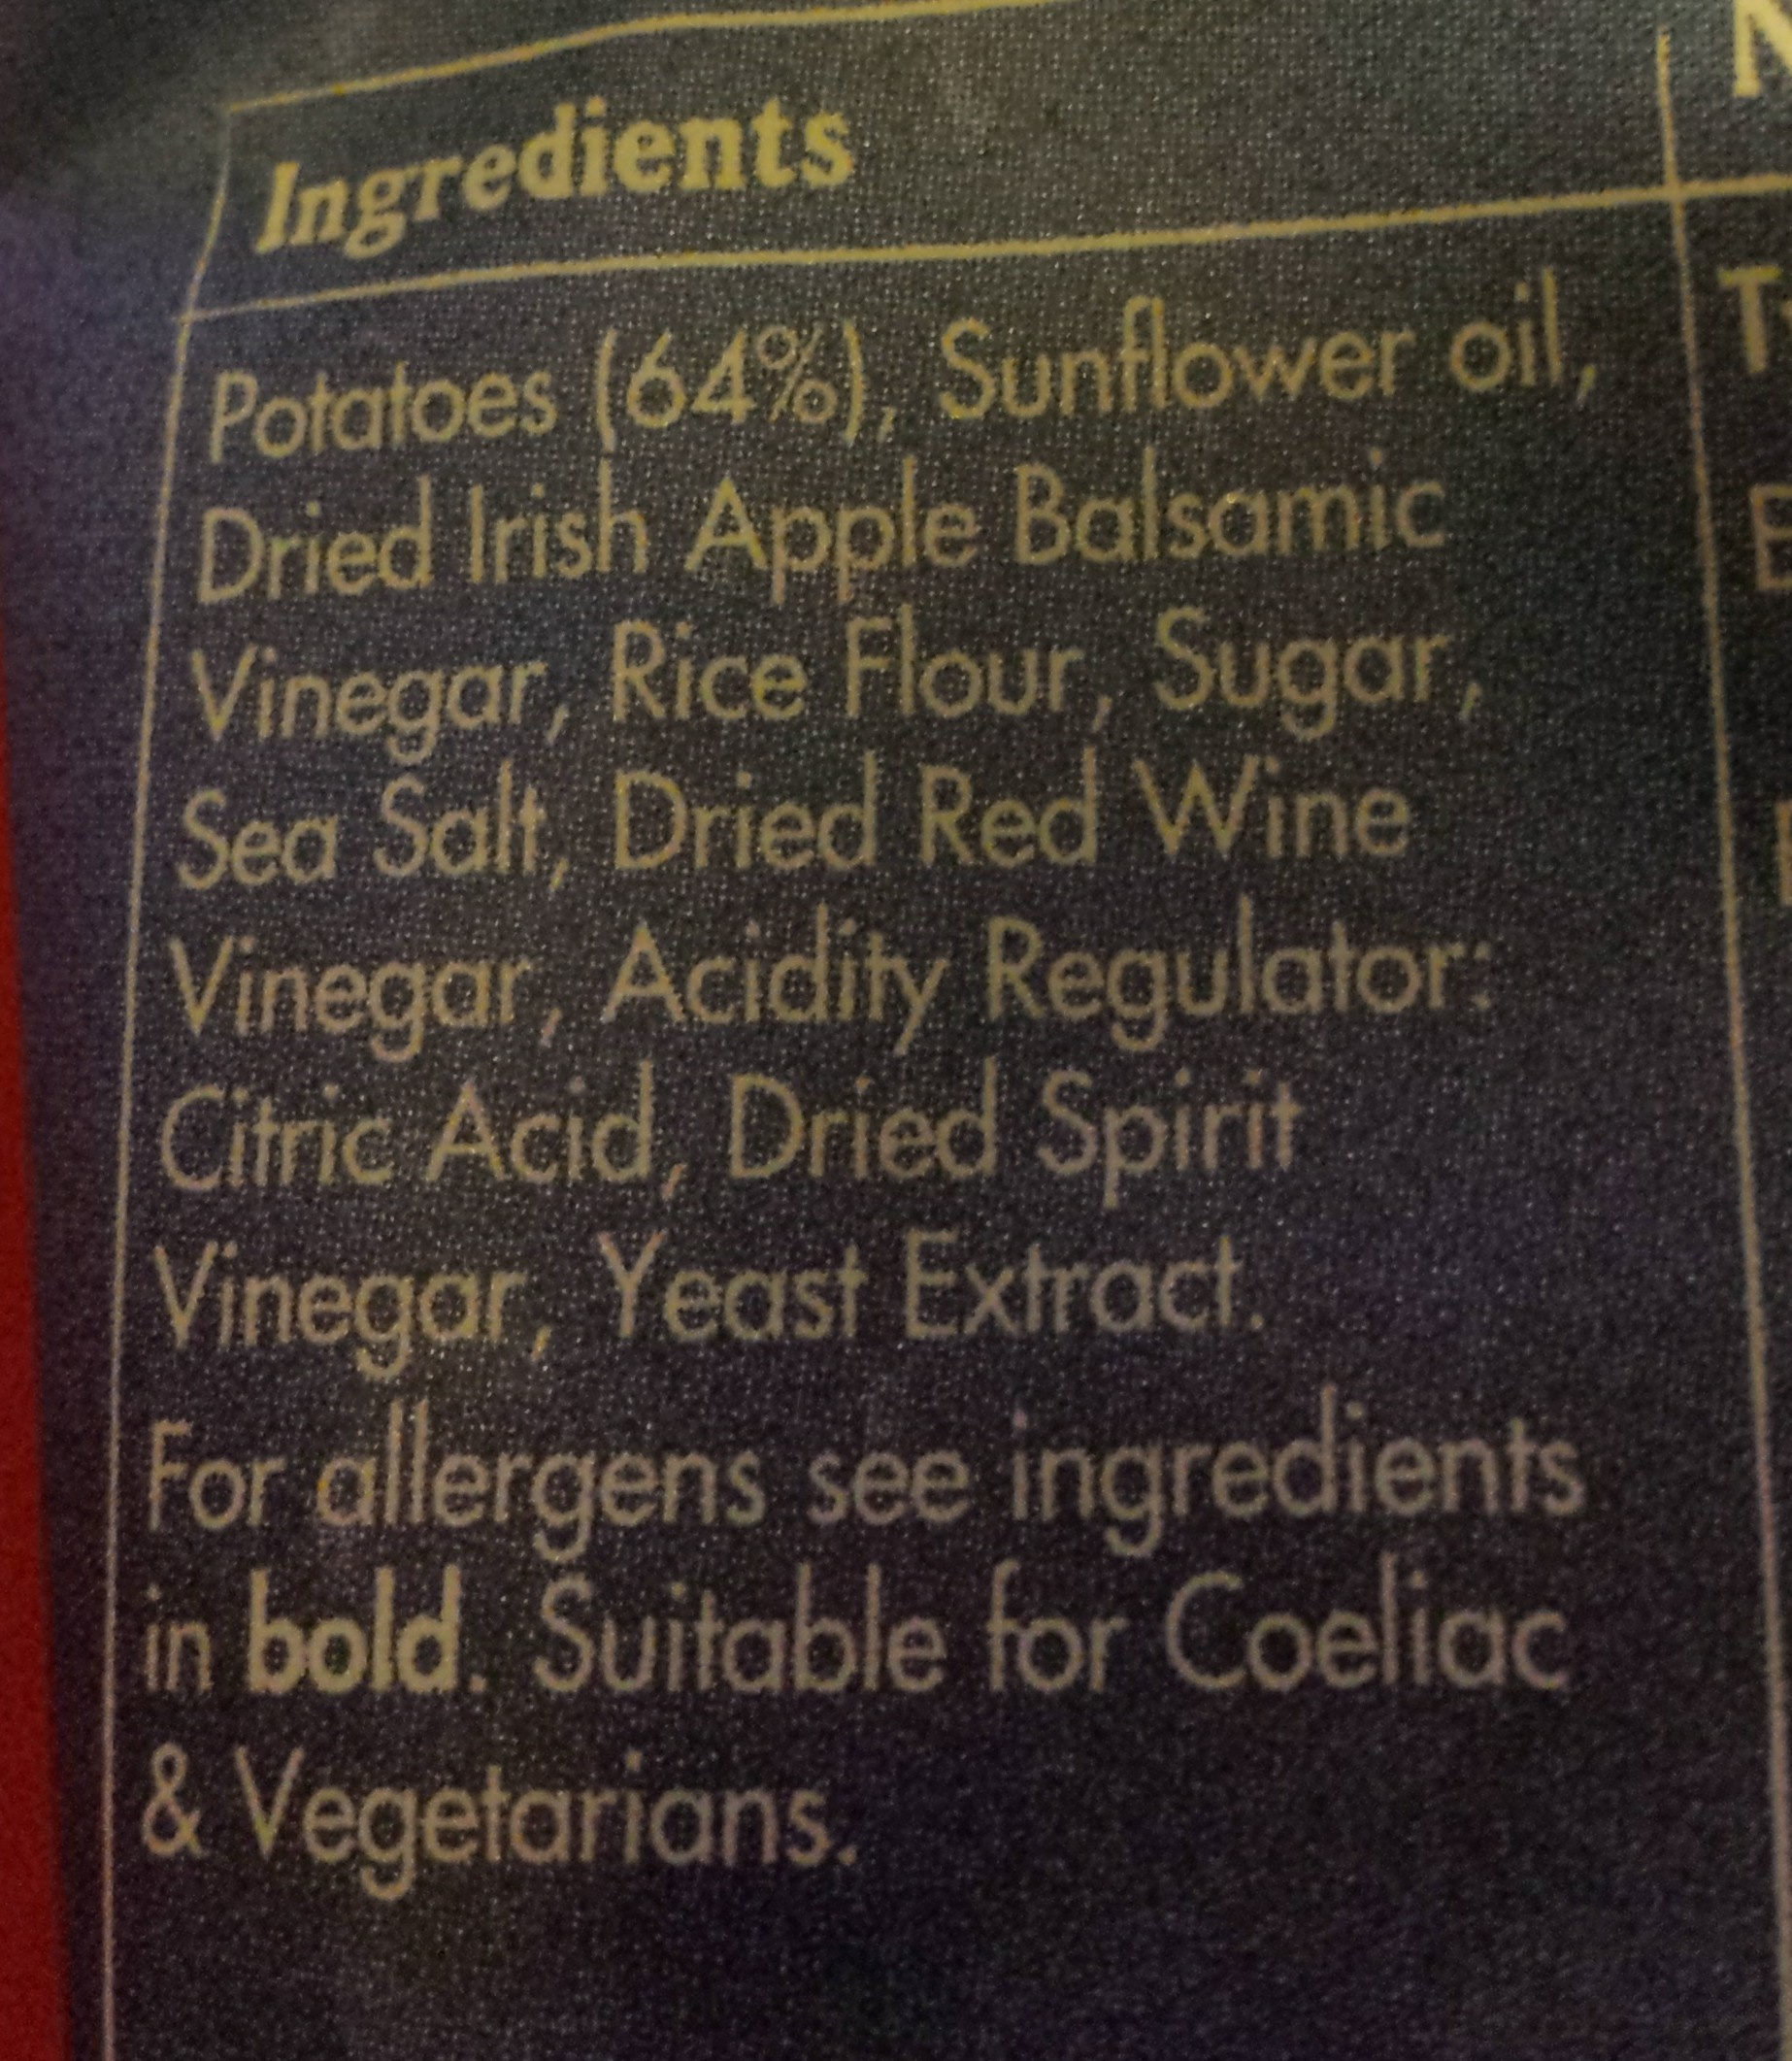 Atlantic Sea Salt and Balsamic vinegar crisps - Ingredients